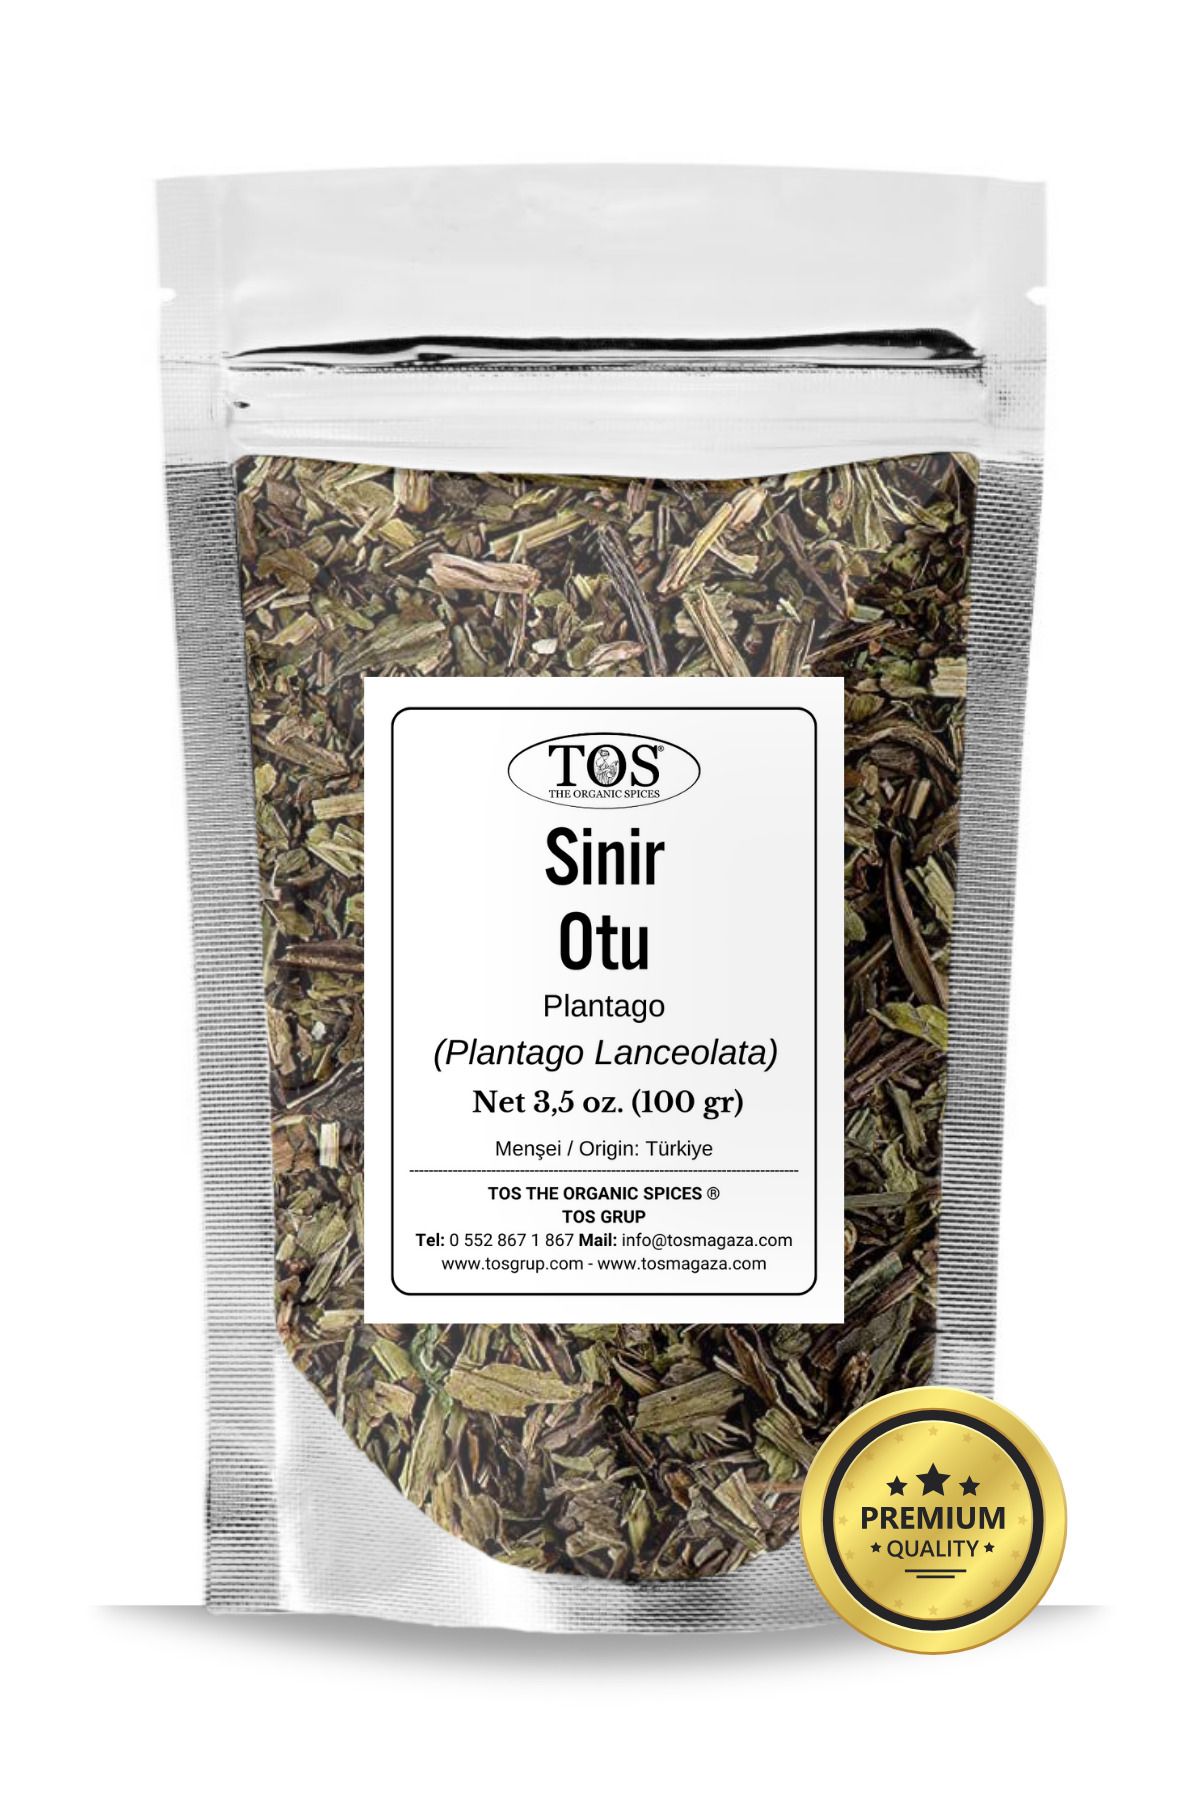 TOS The Organic Spices Sinir Otu 100 gr (1. KALİTE) Plantago Lanceolata